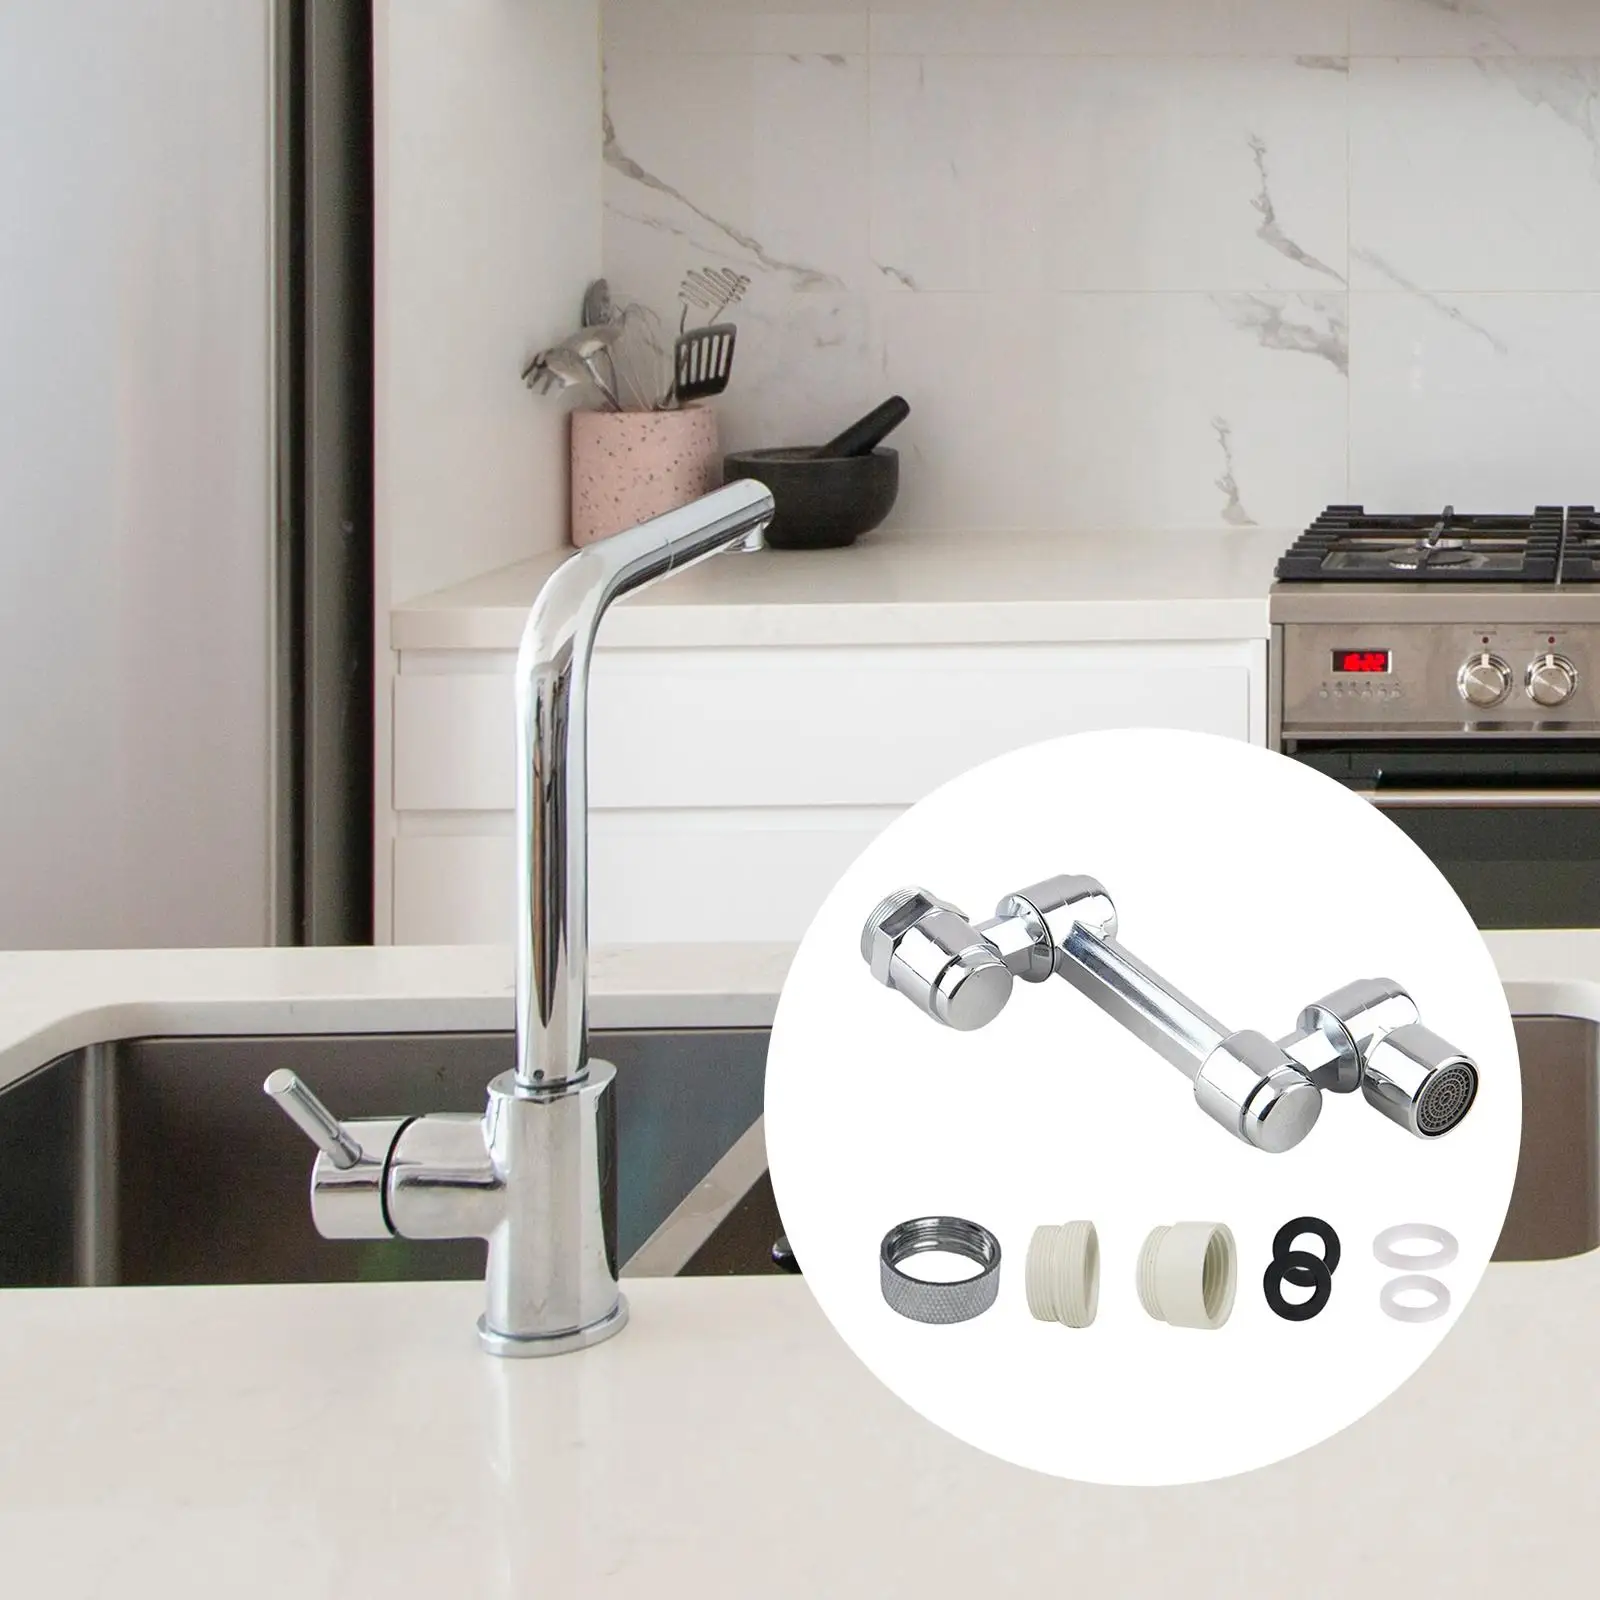 Flexible Swivel Sink Faucet Aerator, Splash Filter Faucet, for Home Hotel Restaurant Laundry Room Bathroom Basin